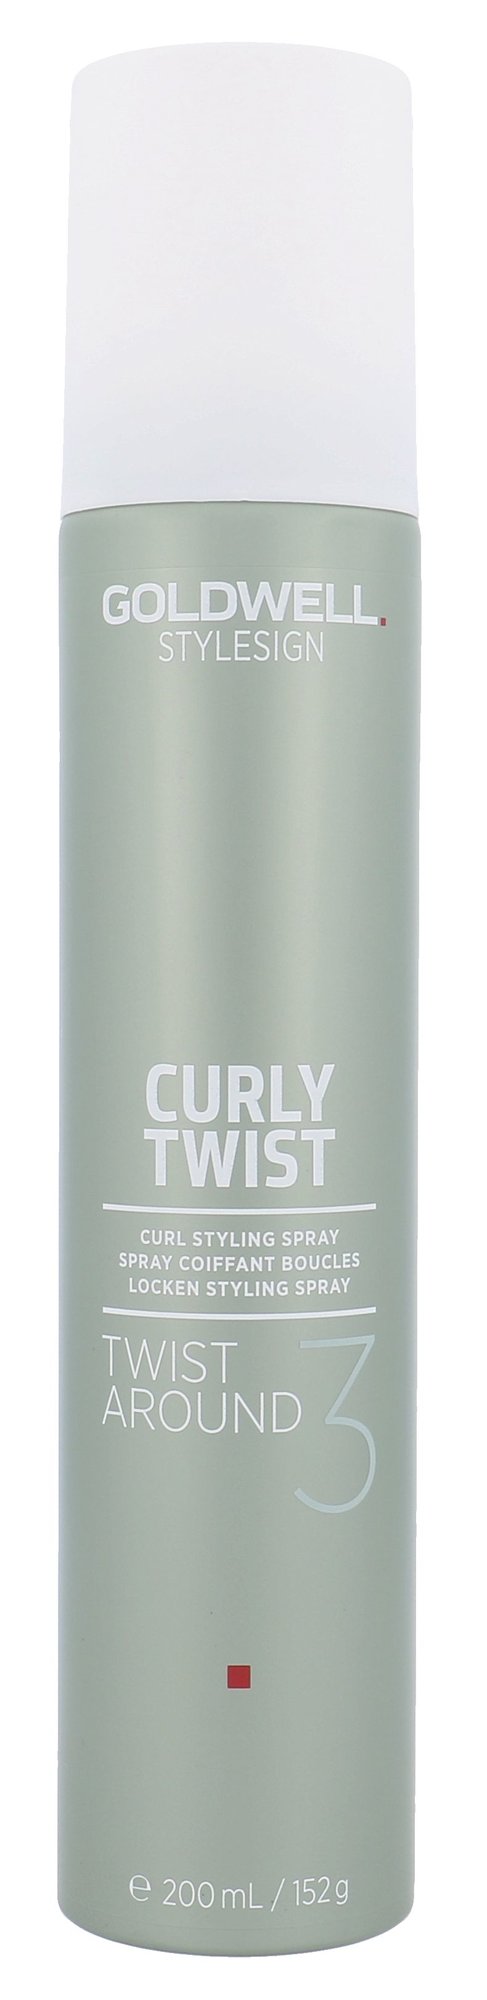 Goldwell Style Sign Curly Twist Twist Around